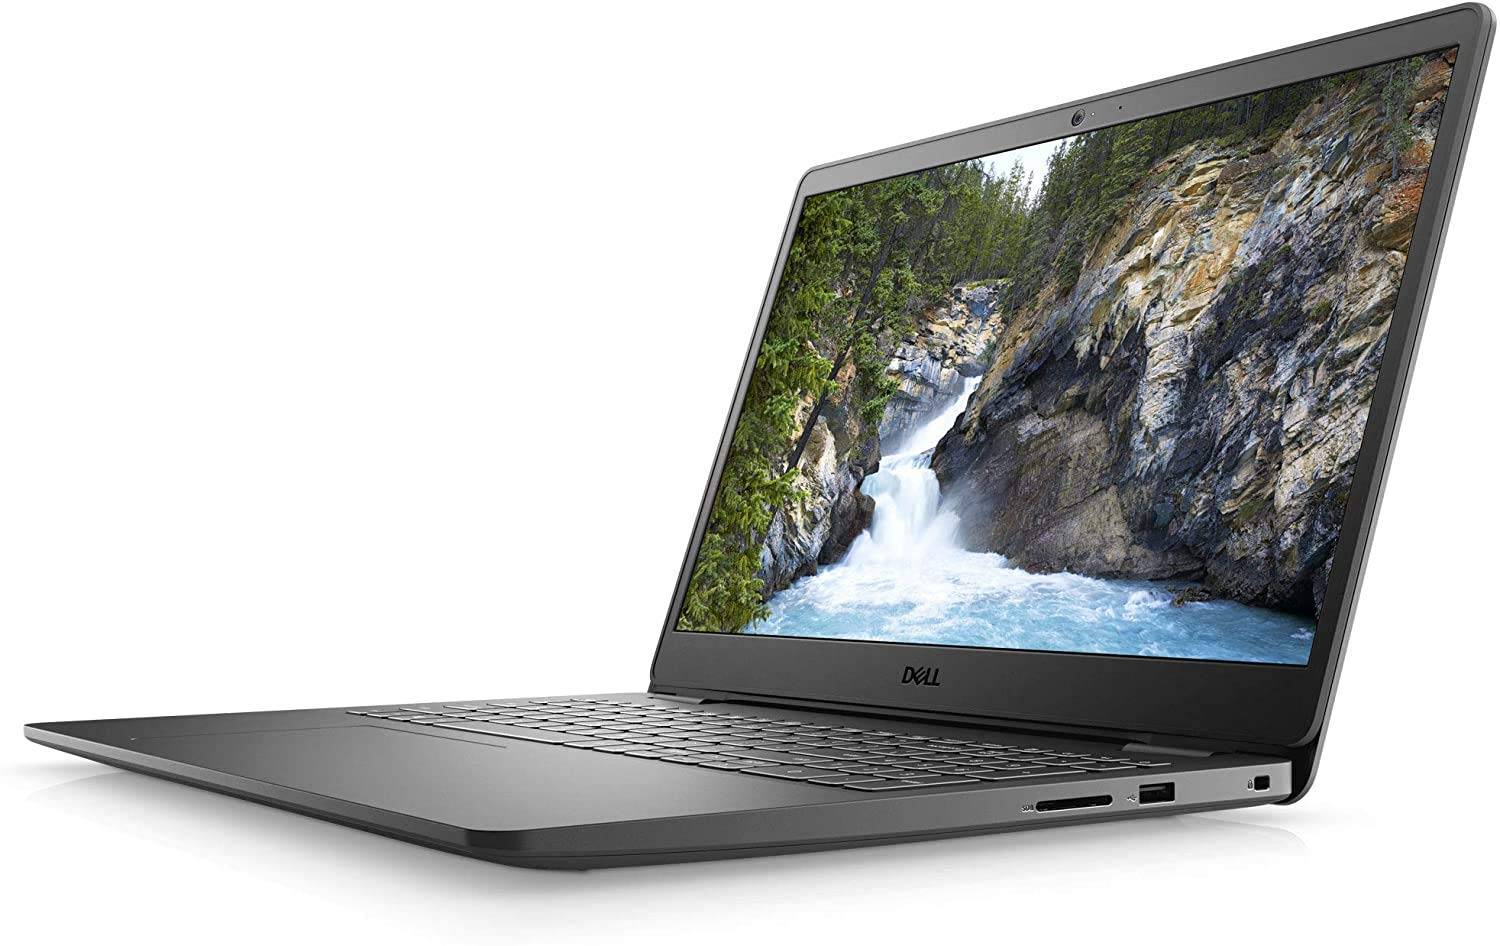 Thumbnail of Dell Inspiron 15 3501 Laptop.